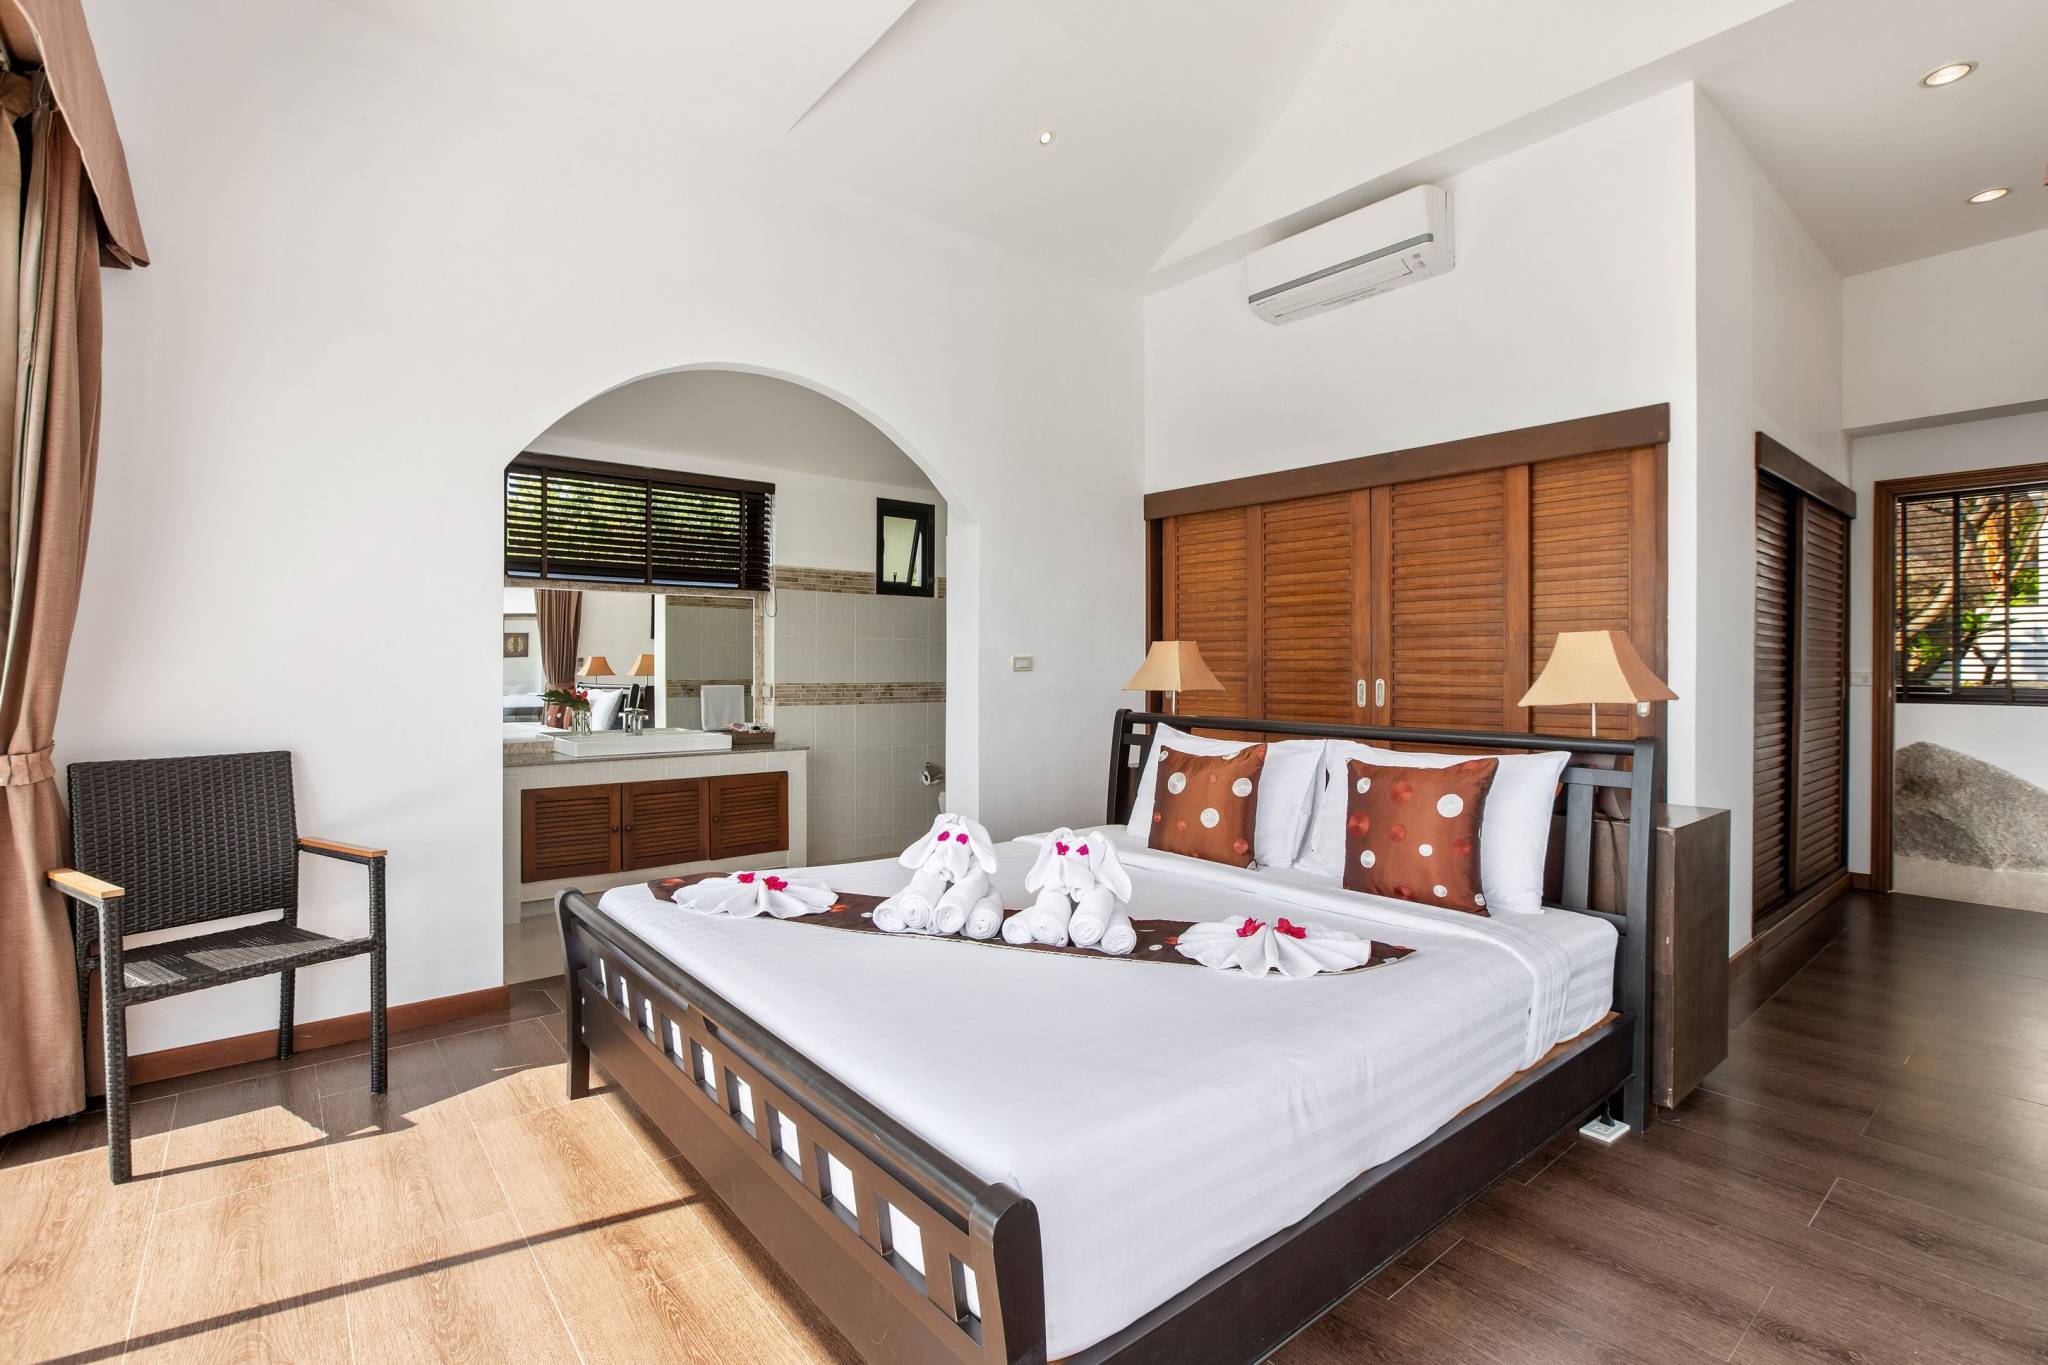 4 Bedroom Sunny Banks Villa For Sale in Lamai: 4 Bedroom Sunny Banks Villa – Lamai